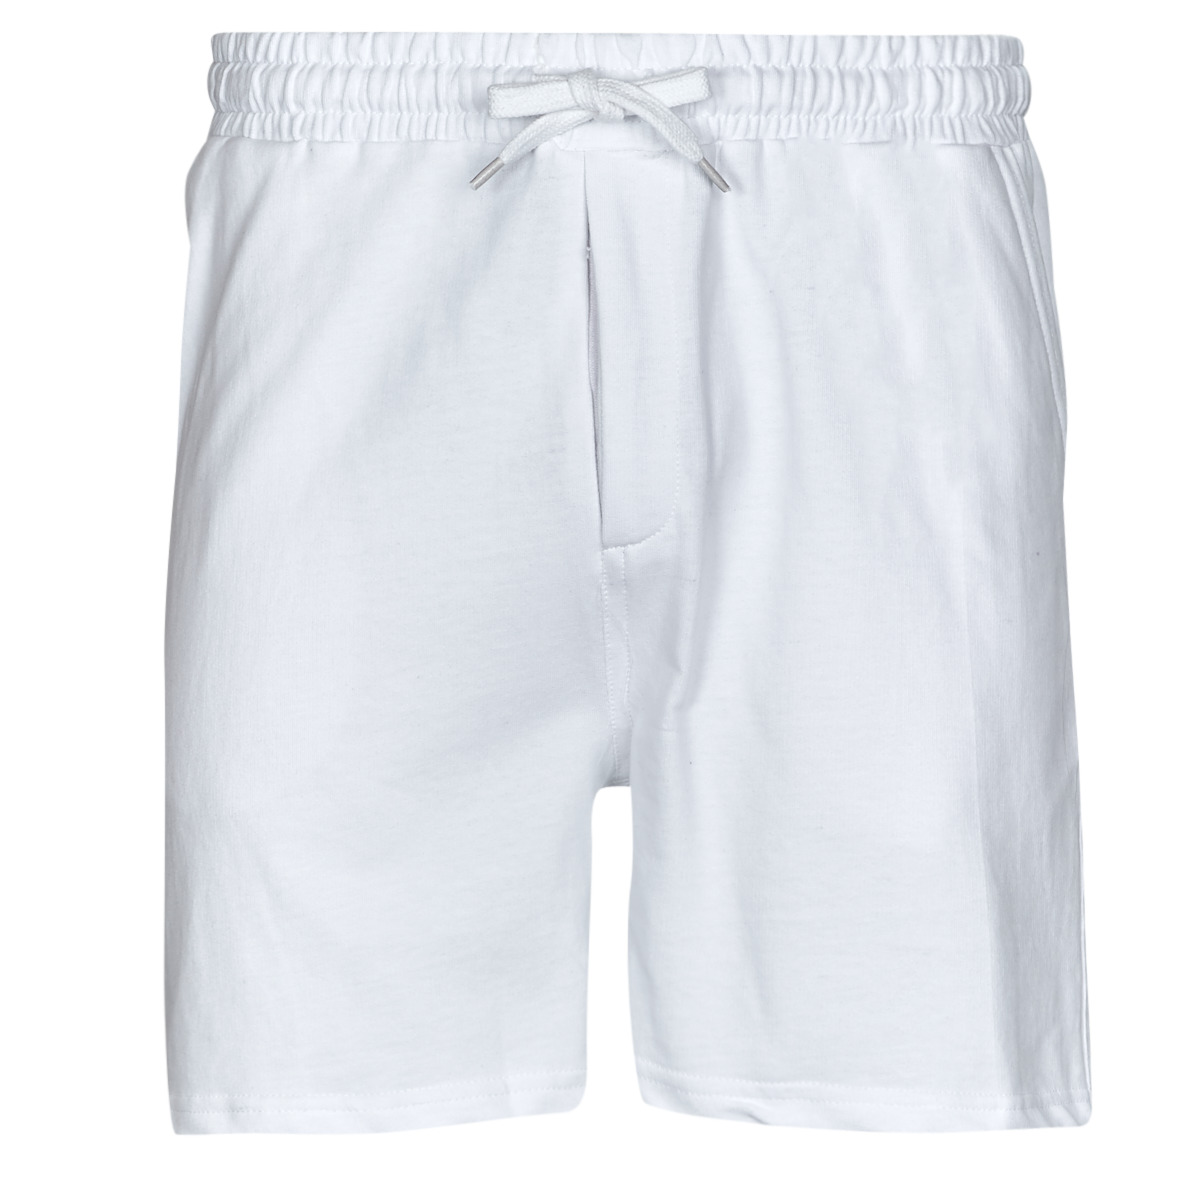 Kleidung Herren Shorts / Bermudas Yurban BERGULE Weiss